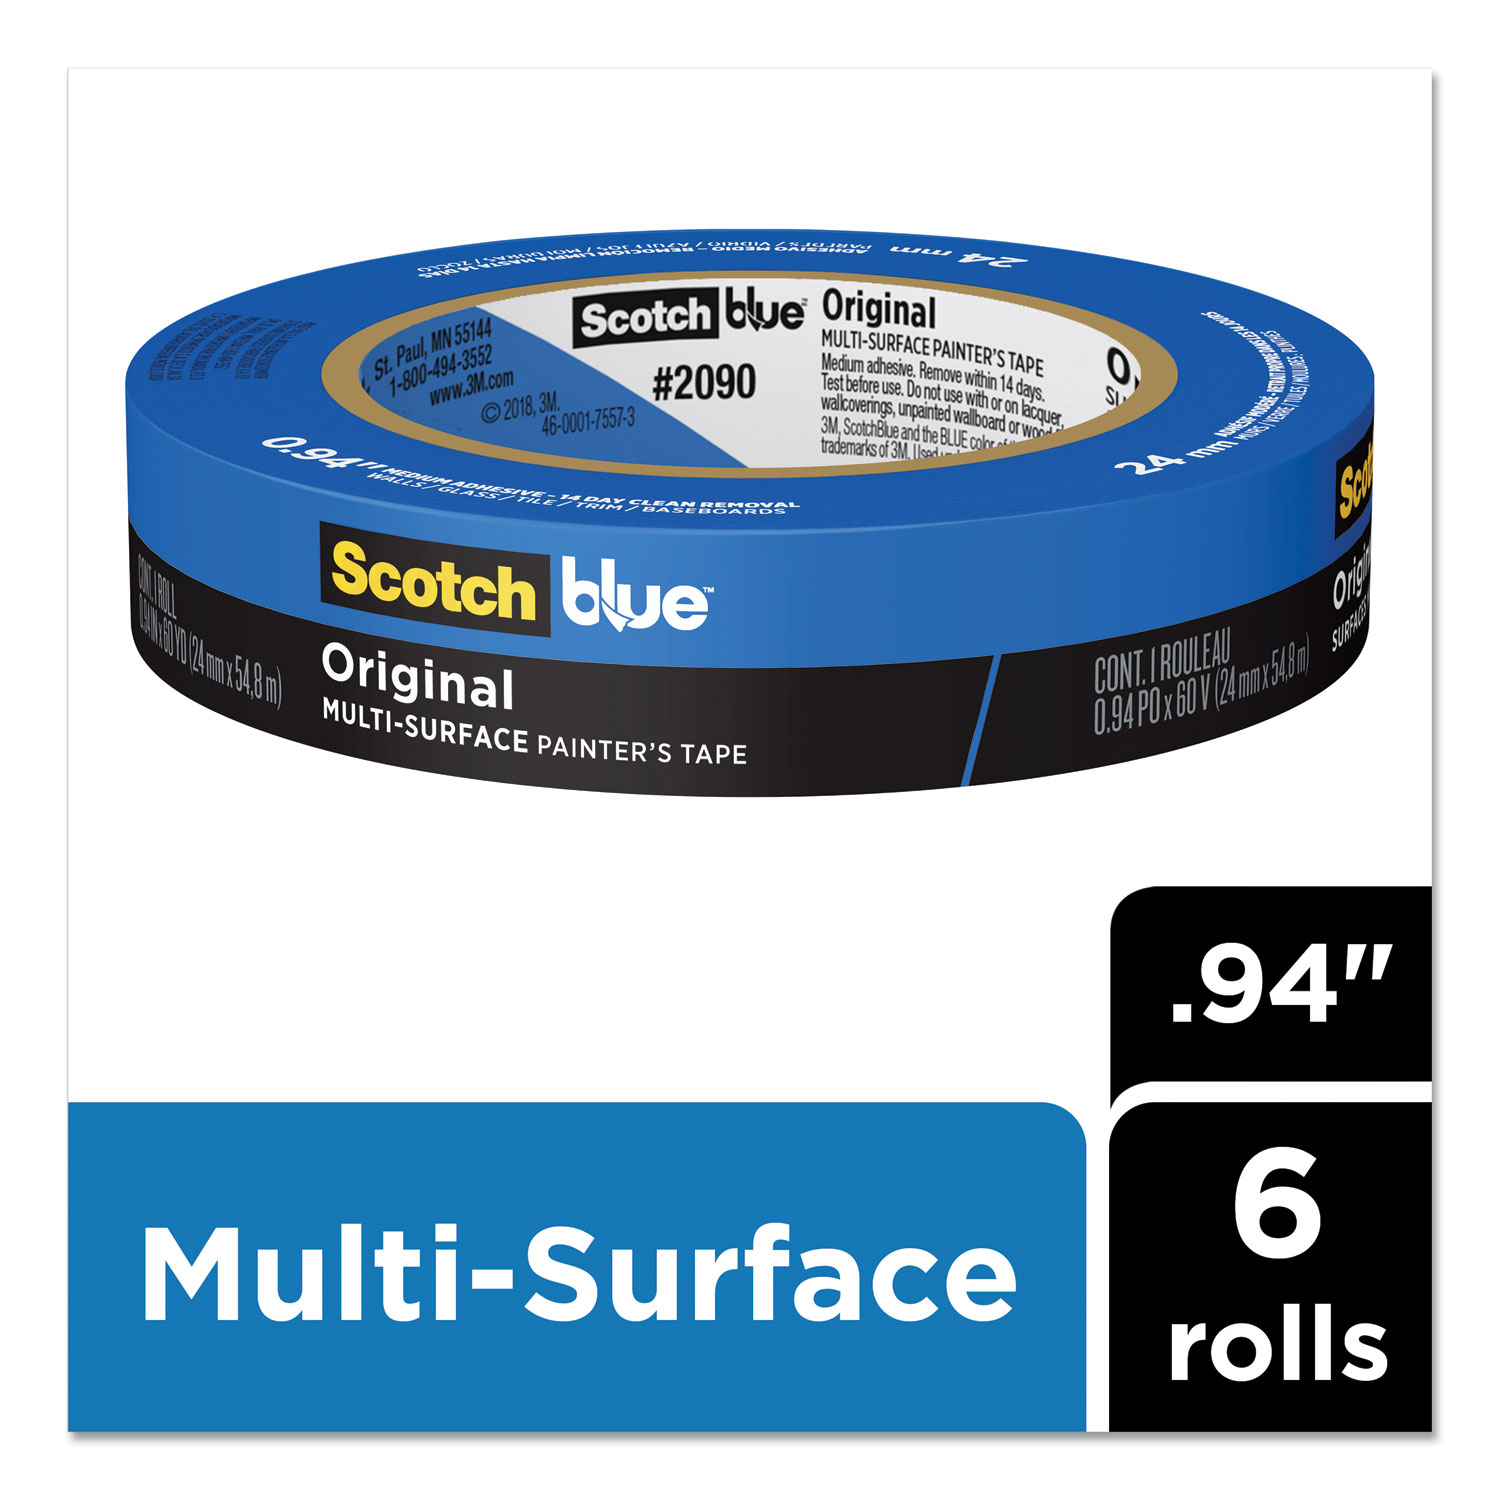 3M Scotch™ Two-Roll Desktop Tape Dispenser, 3 Core, High-Impact Plastic,  Beige, MMMC22